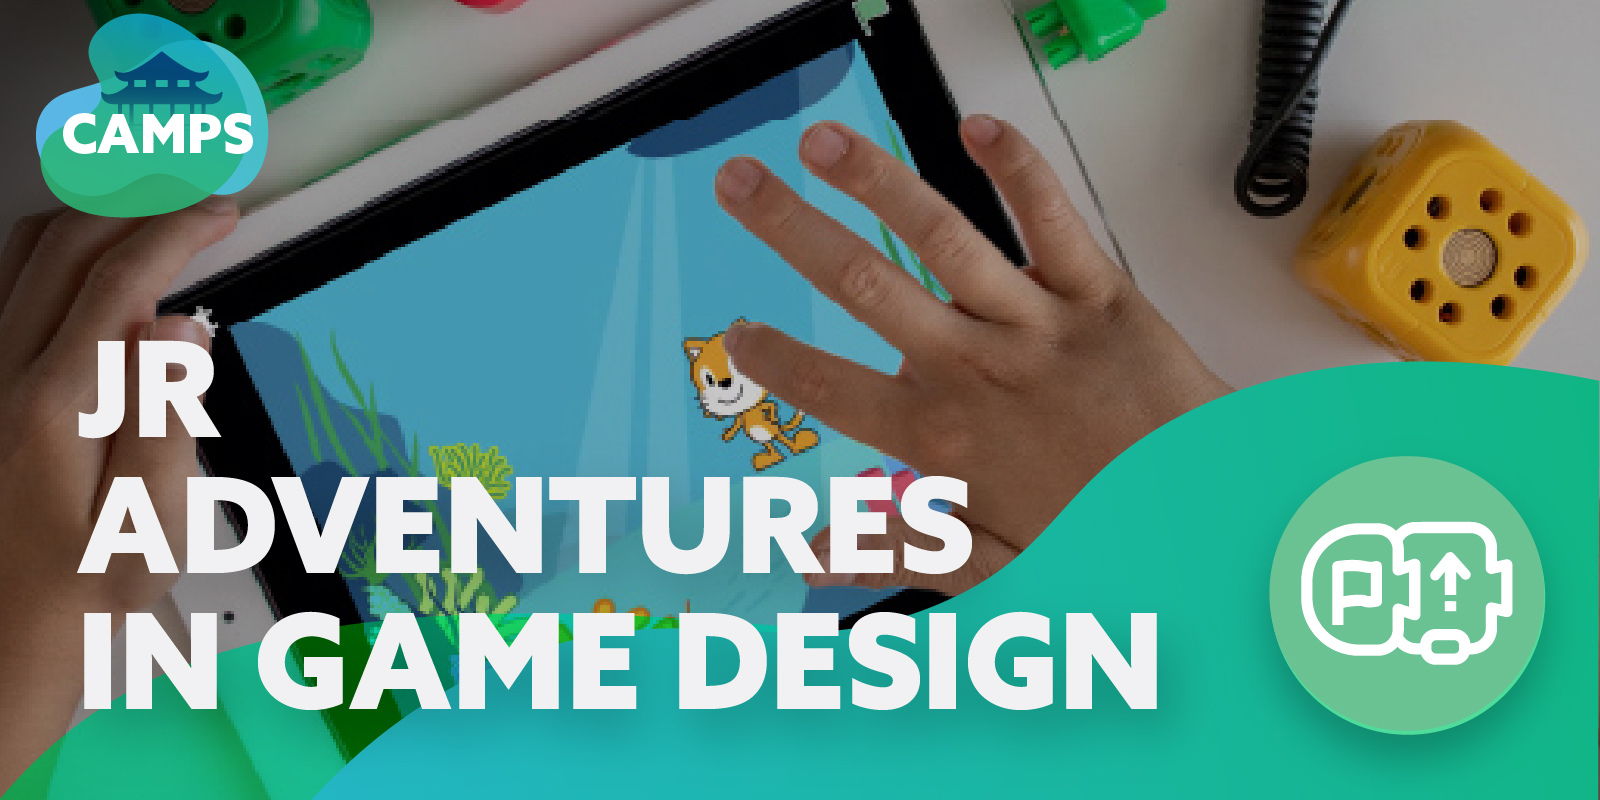 JR Adventures in Game Design promotional image